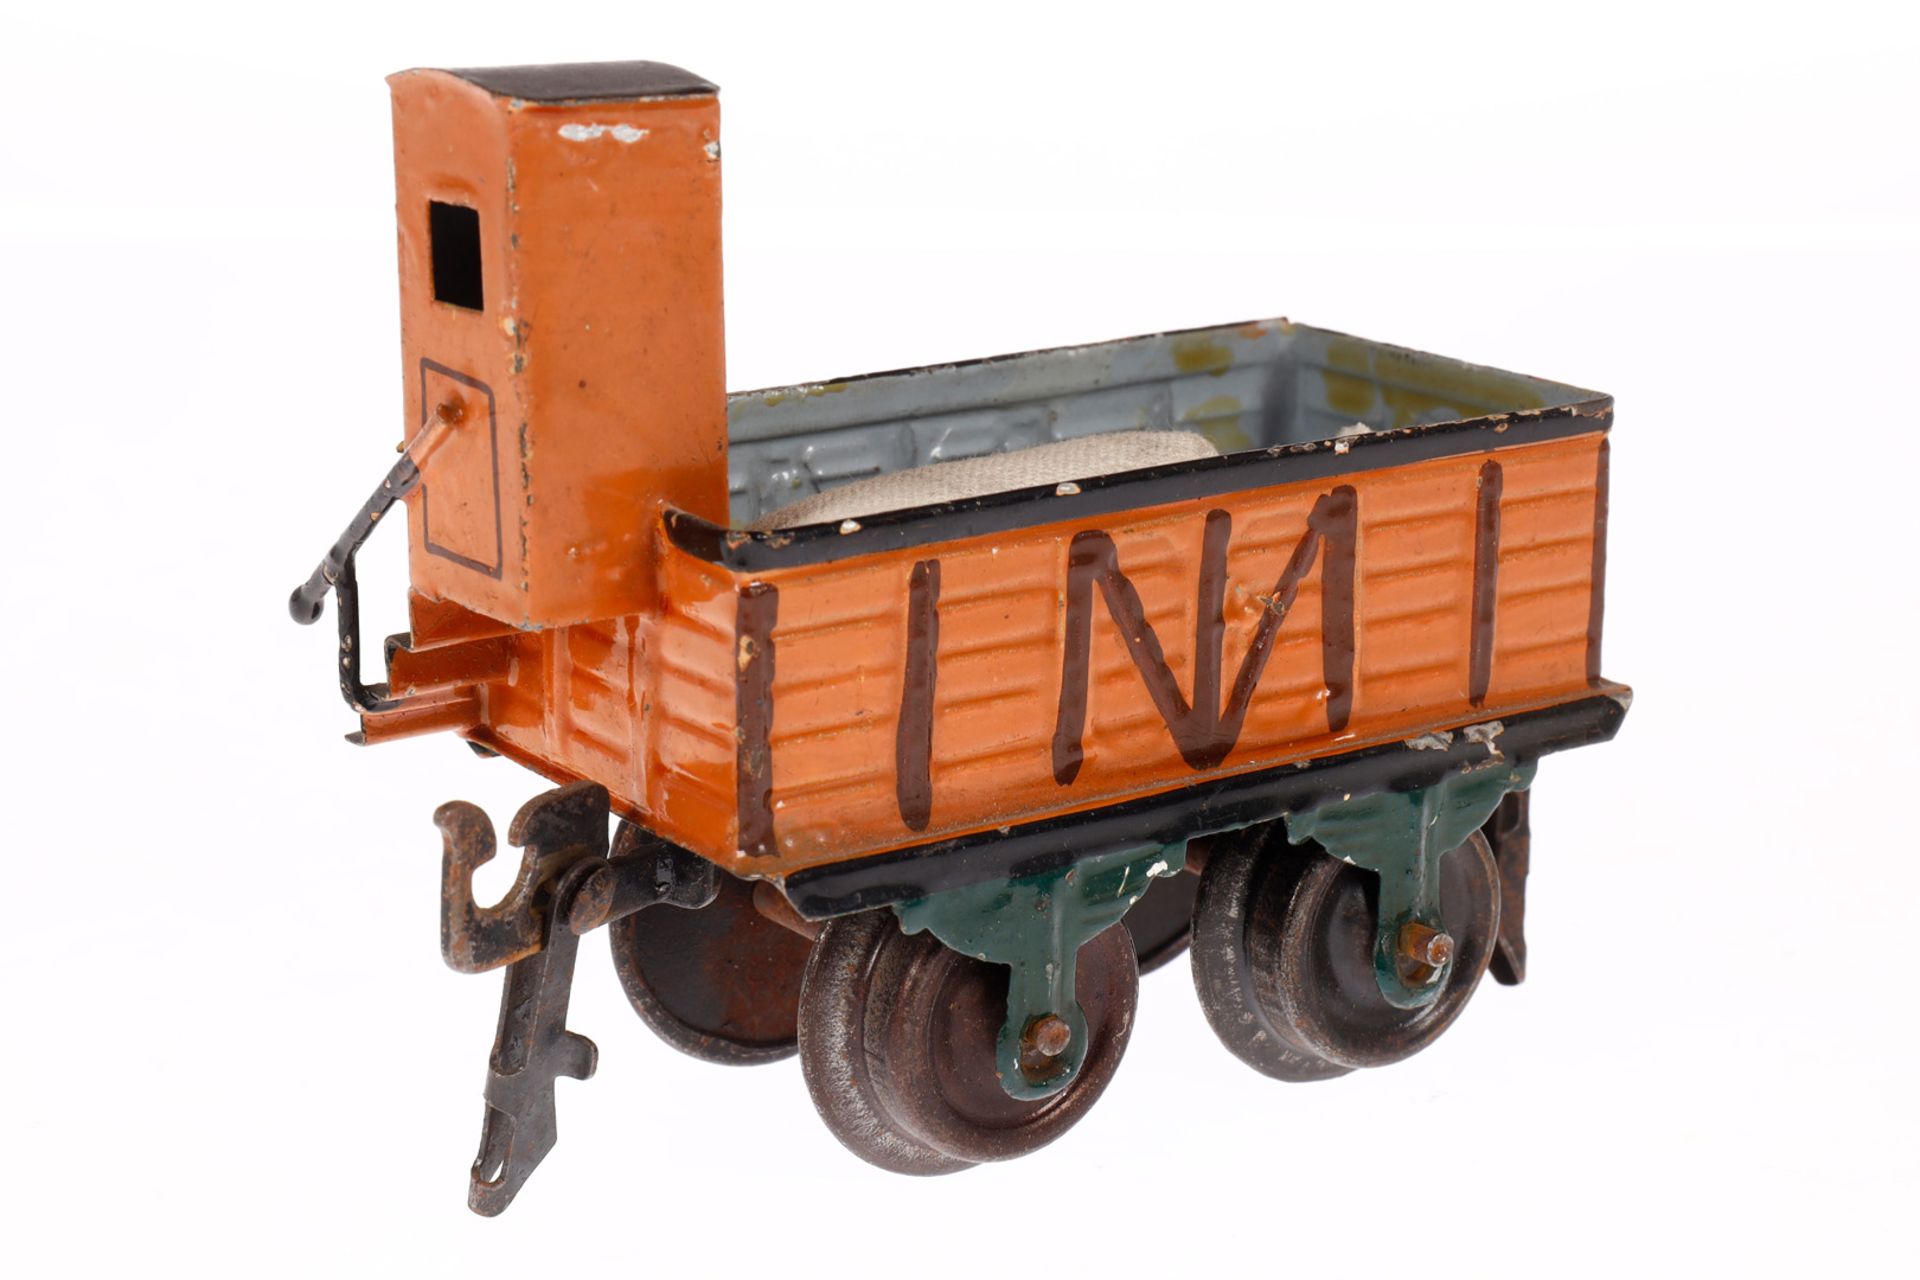 Märklin offener Güterwagen 1817, Spur 0, uralt, HL, mit BRHh, LS und gealterter Lack, L 8, sonst - Image 3 of 4